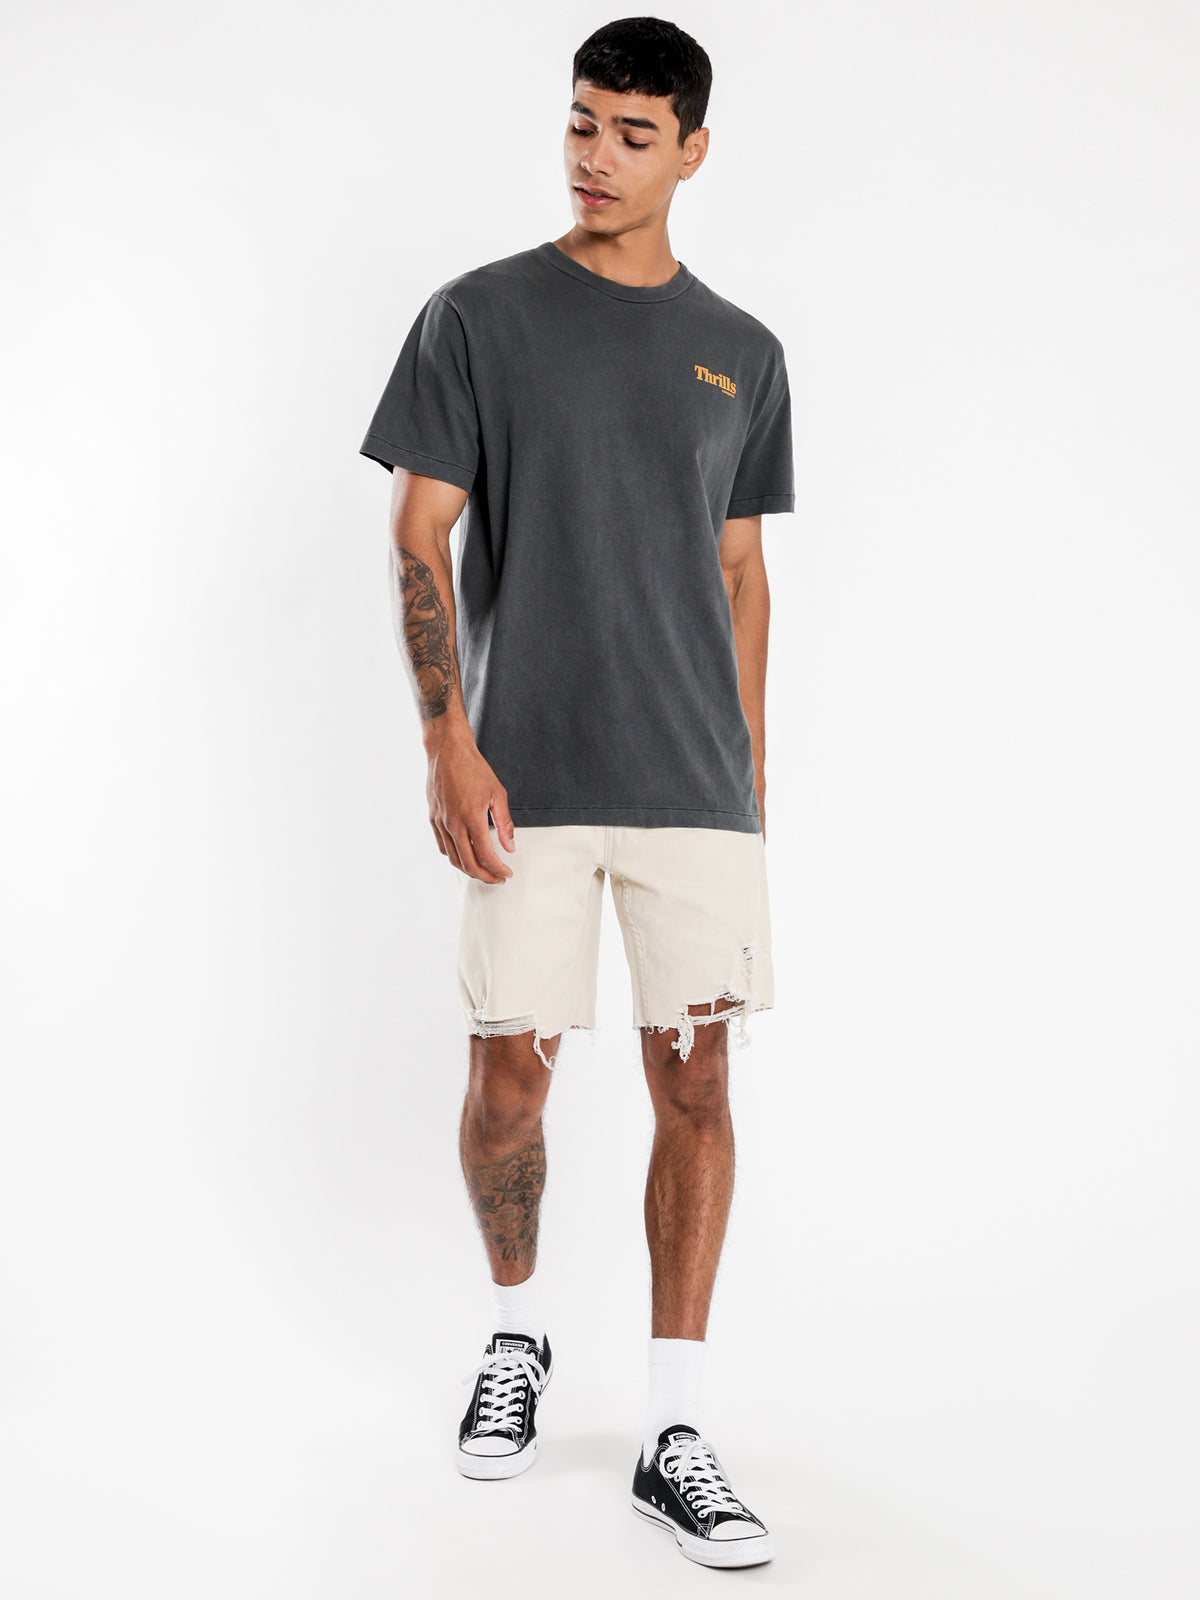 Cycles &amp; Clothing Merch Fit T-Shirt in Merch Black